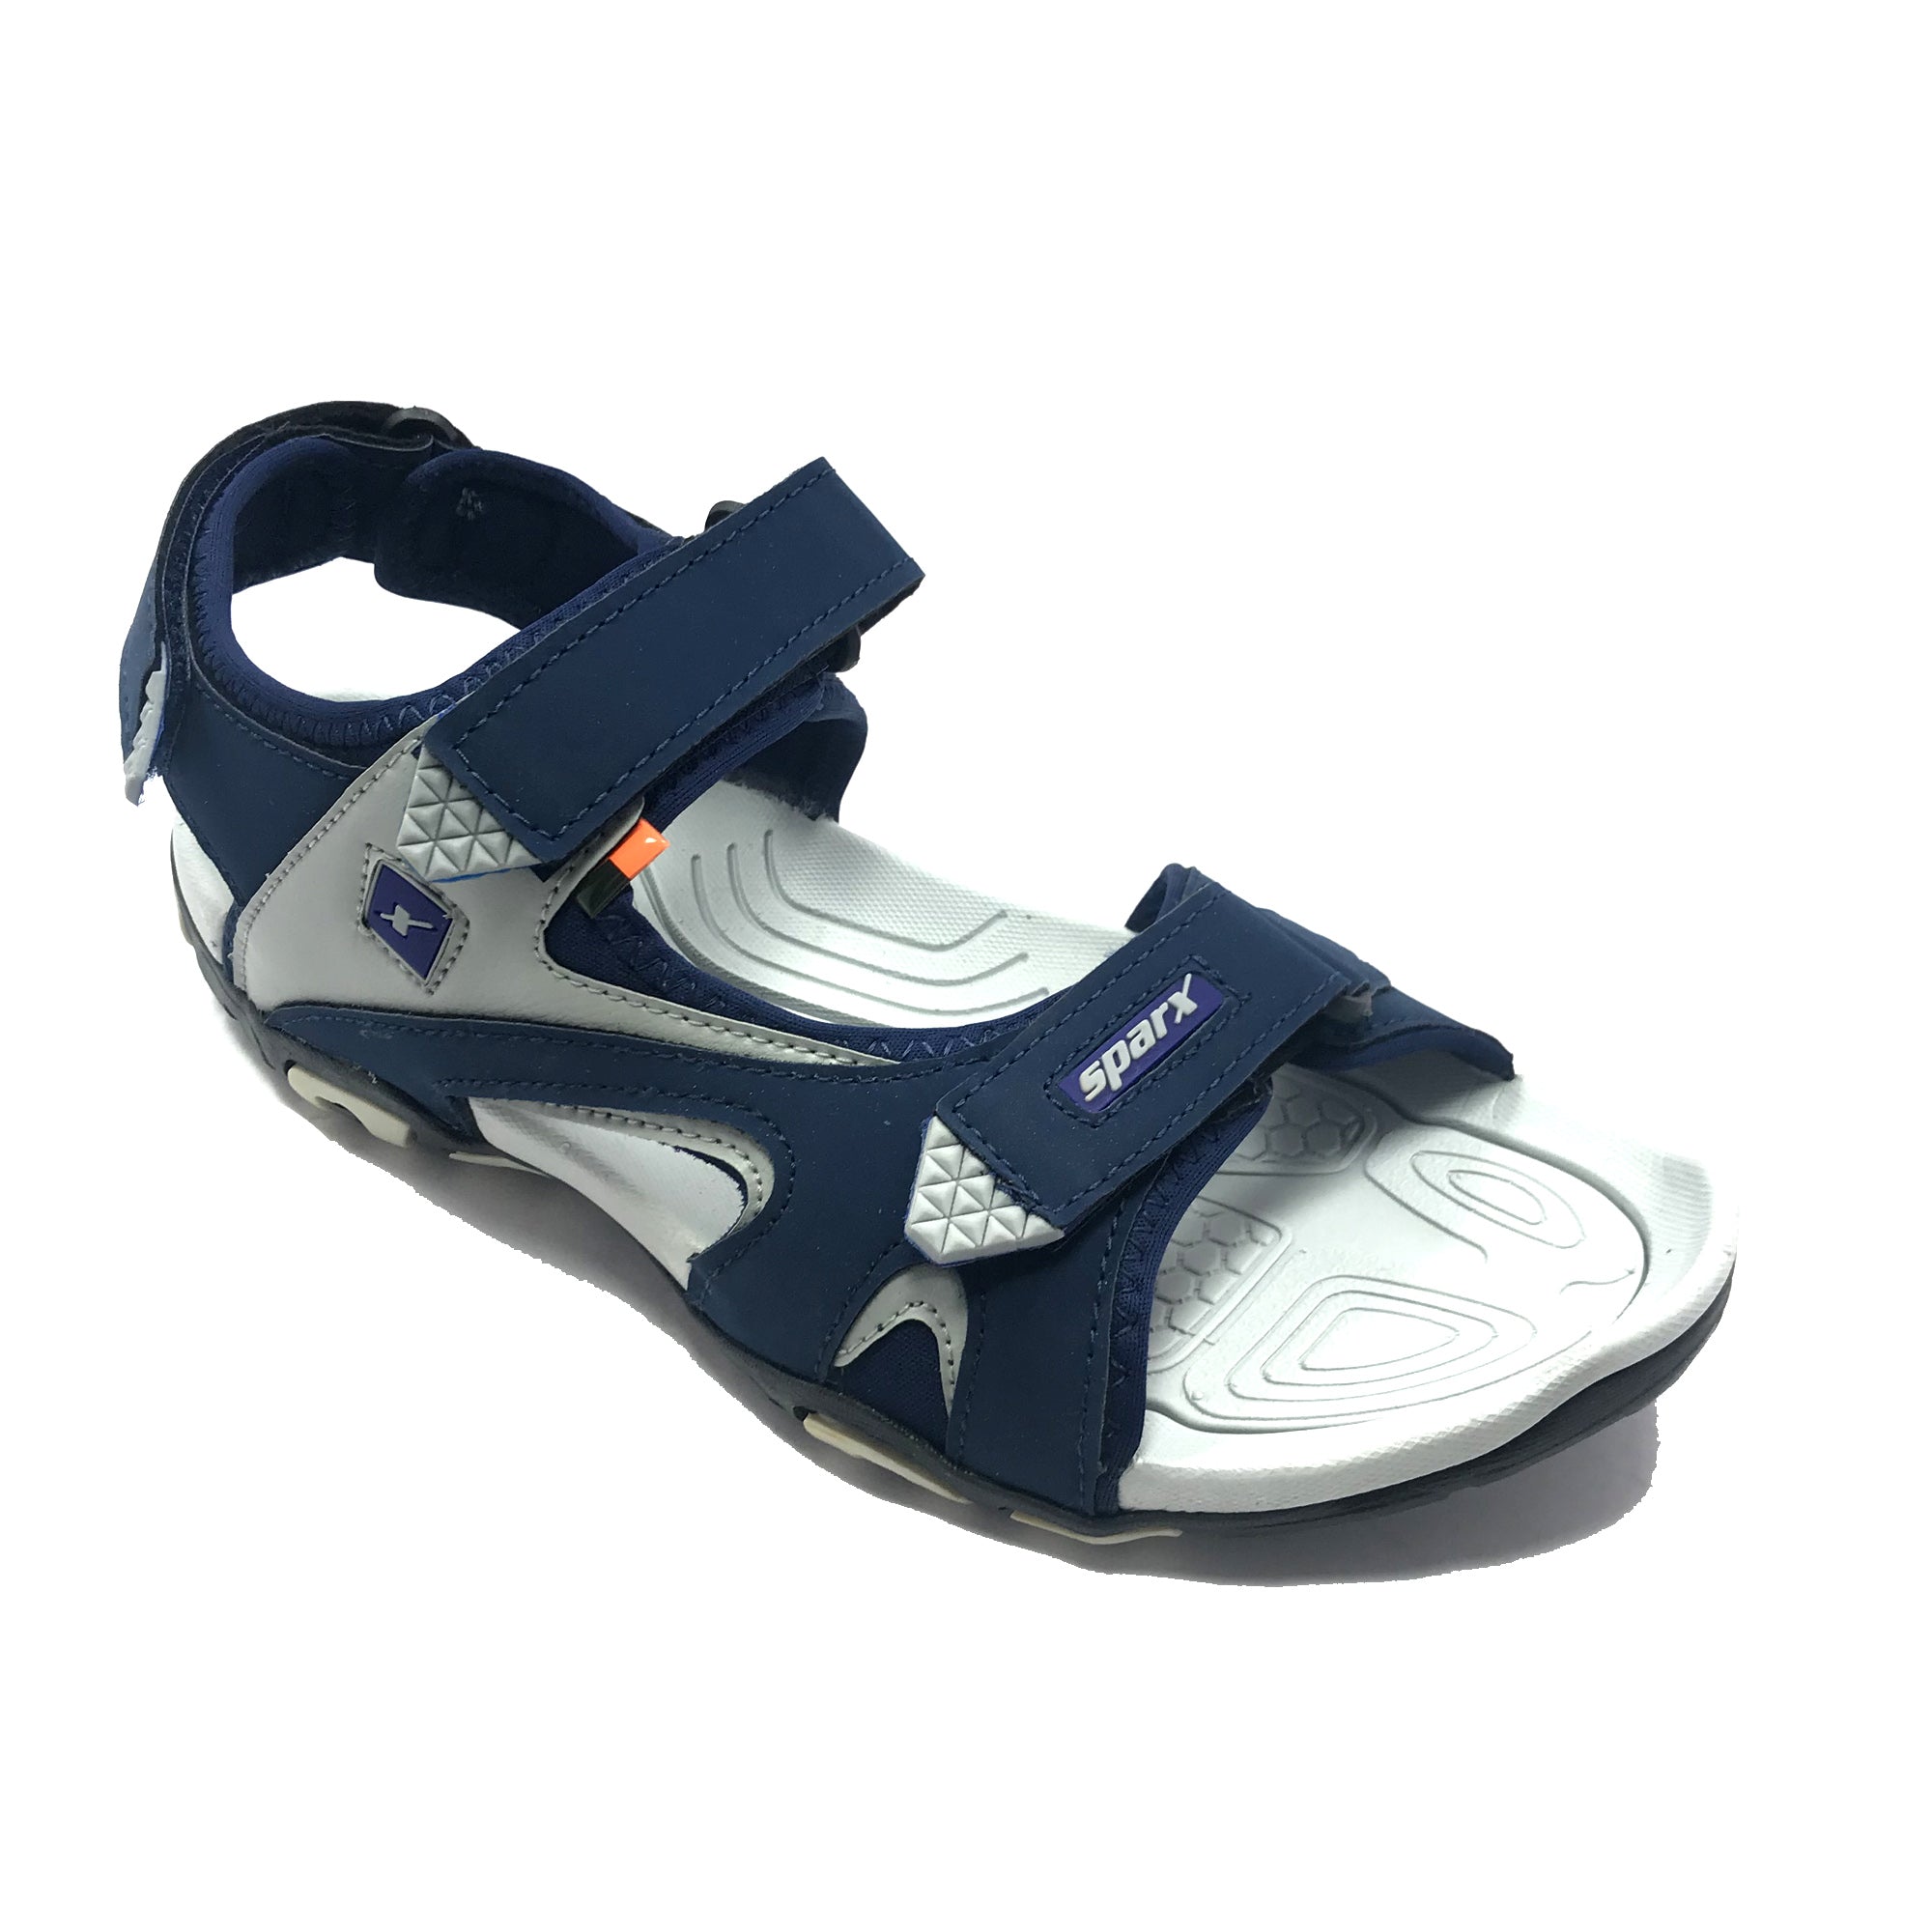 Latest Sparx Sandals arrivals - Men - 5 products | FASHIOLA INDIA